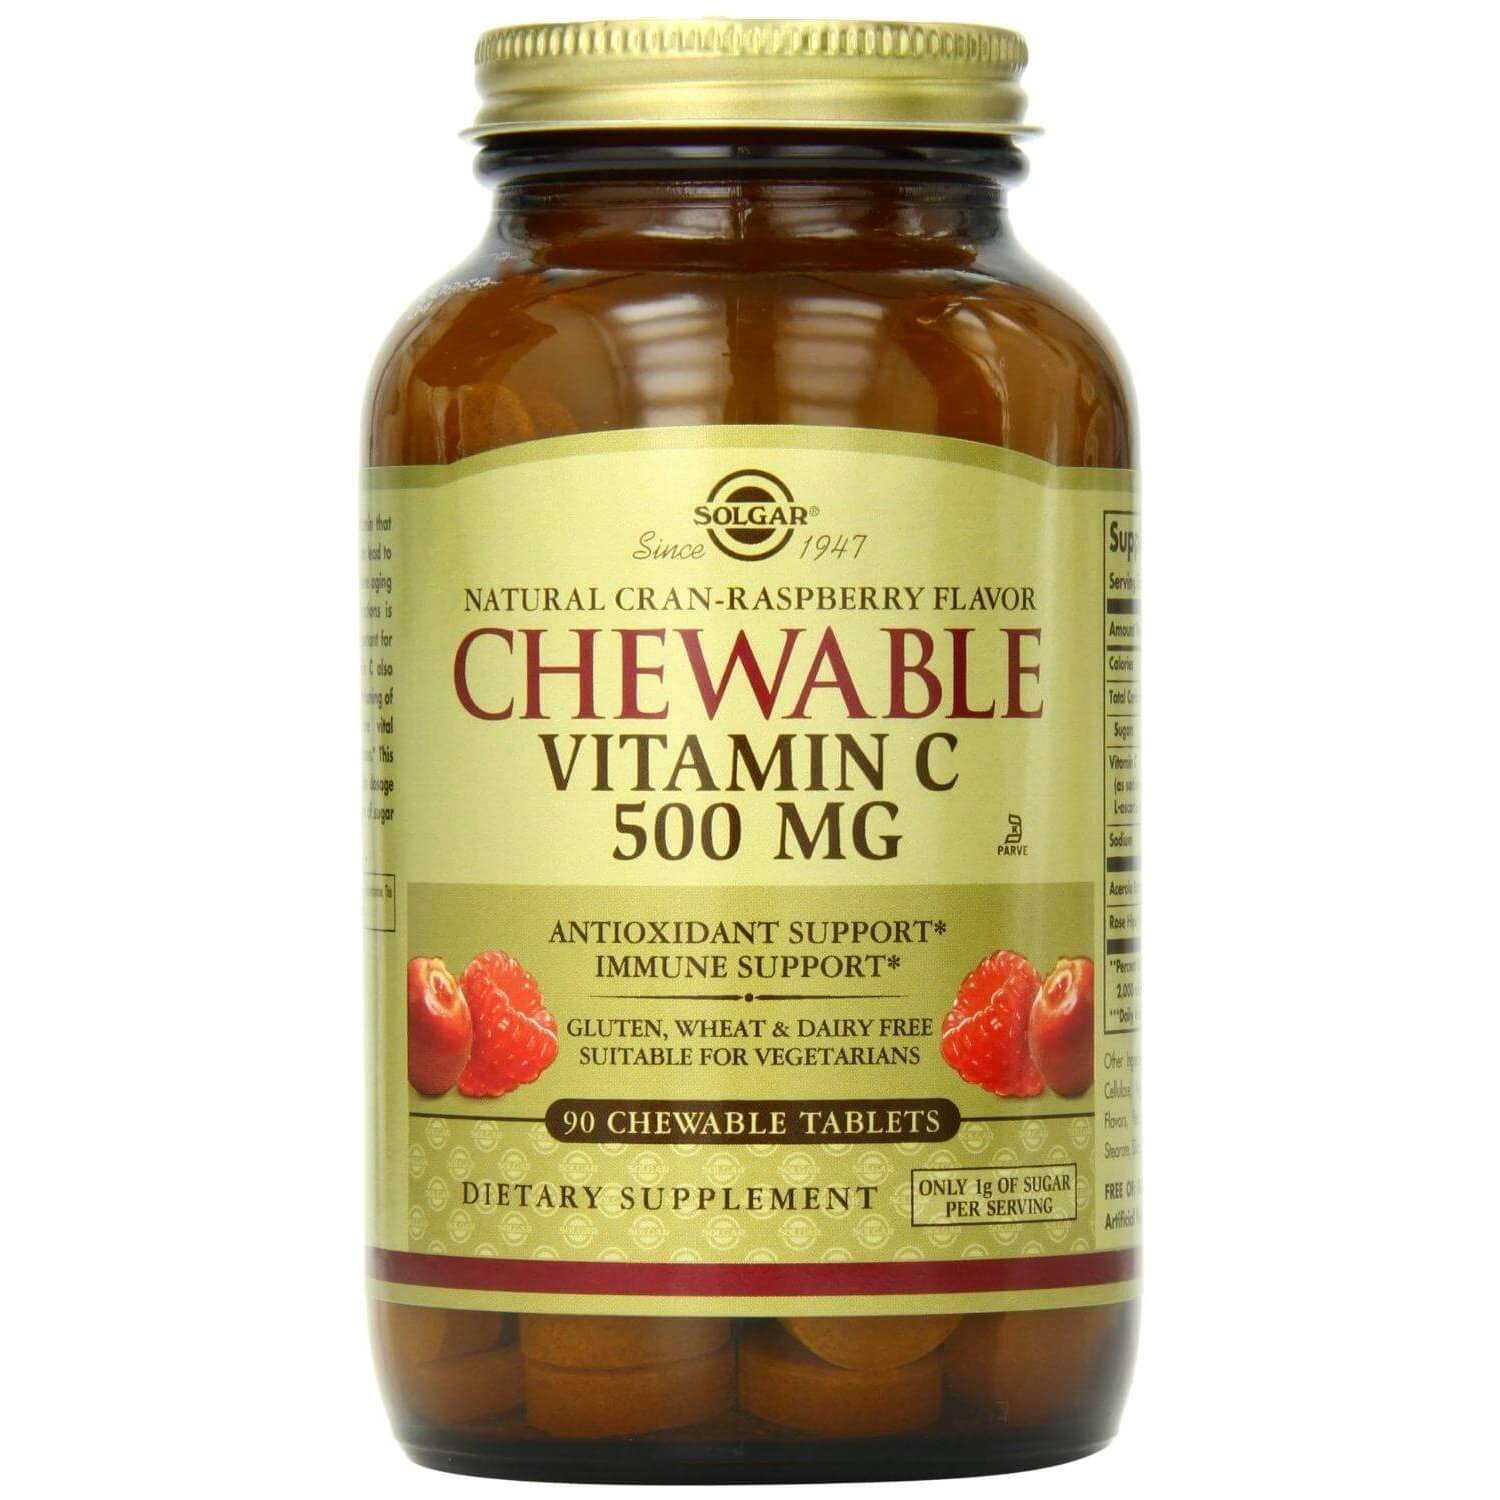 Solgar Chewable Vitamin C 500mg, Συμπλήρωμα Διατροφής Βιταμίνης C για τη Σωστή Λειτουργία του Ανοσοποιητικού Συστήματος 90chew.tabs – Γεύση Βατόμουρο